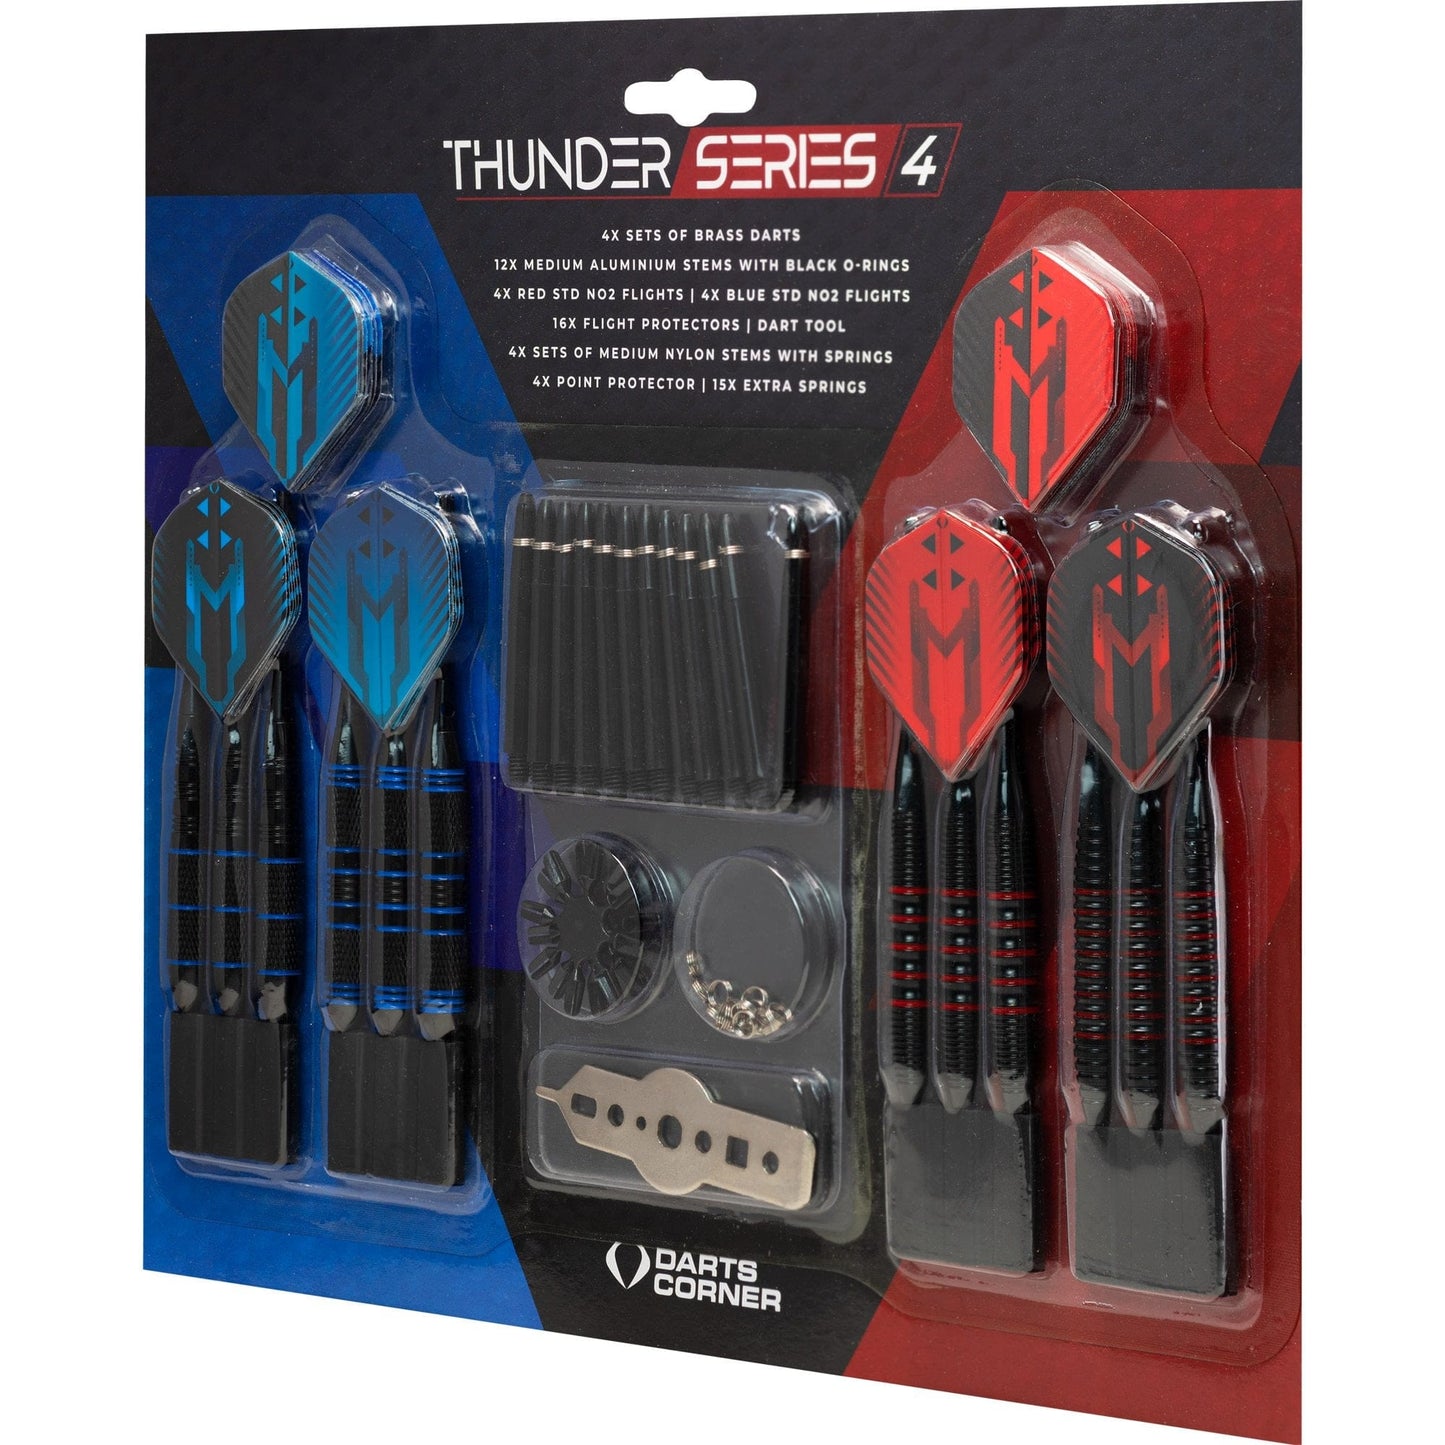 Darts Corner - Thunder Series 4 - Steel Tip Brass - 4 Sets Darts - Blue & Red - 21g 22g 23g 24g 23g